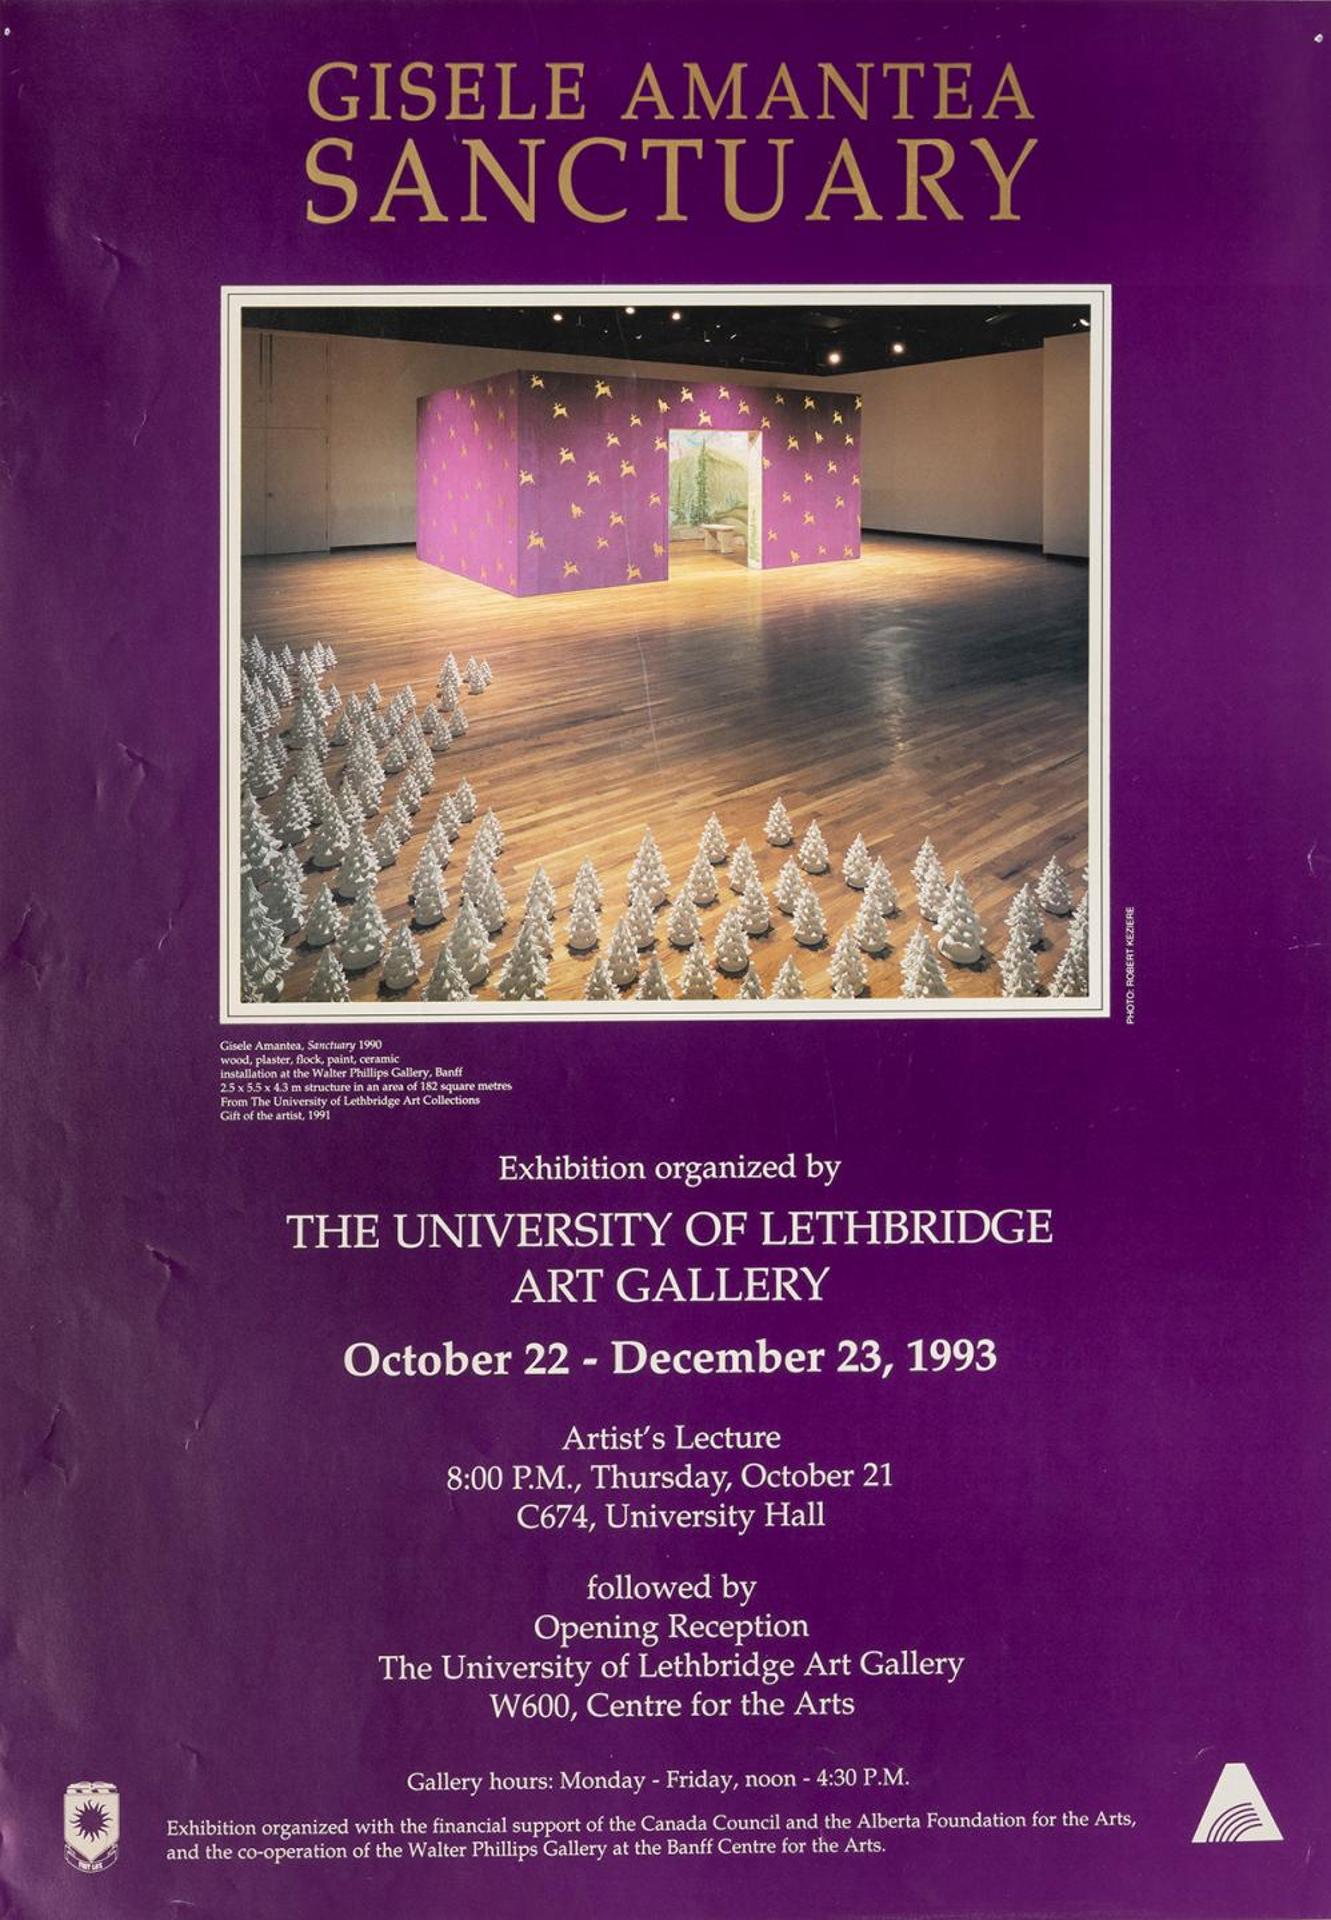 Gisele Amantea (1953) - Sanctuary Exhibition Poster, University of Lethbridge